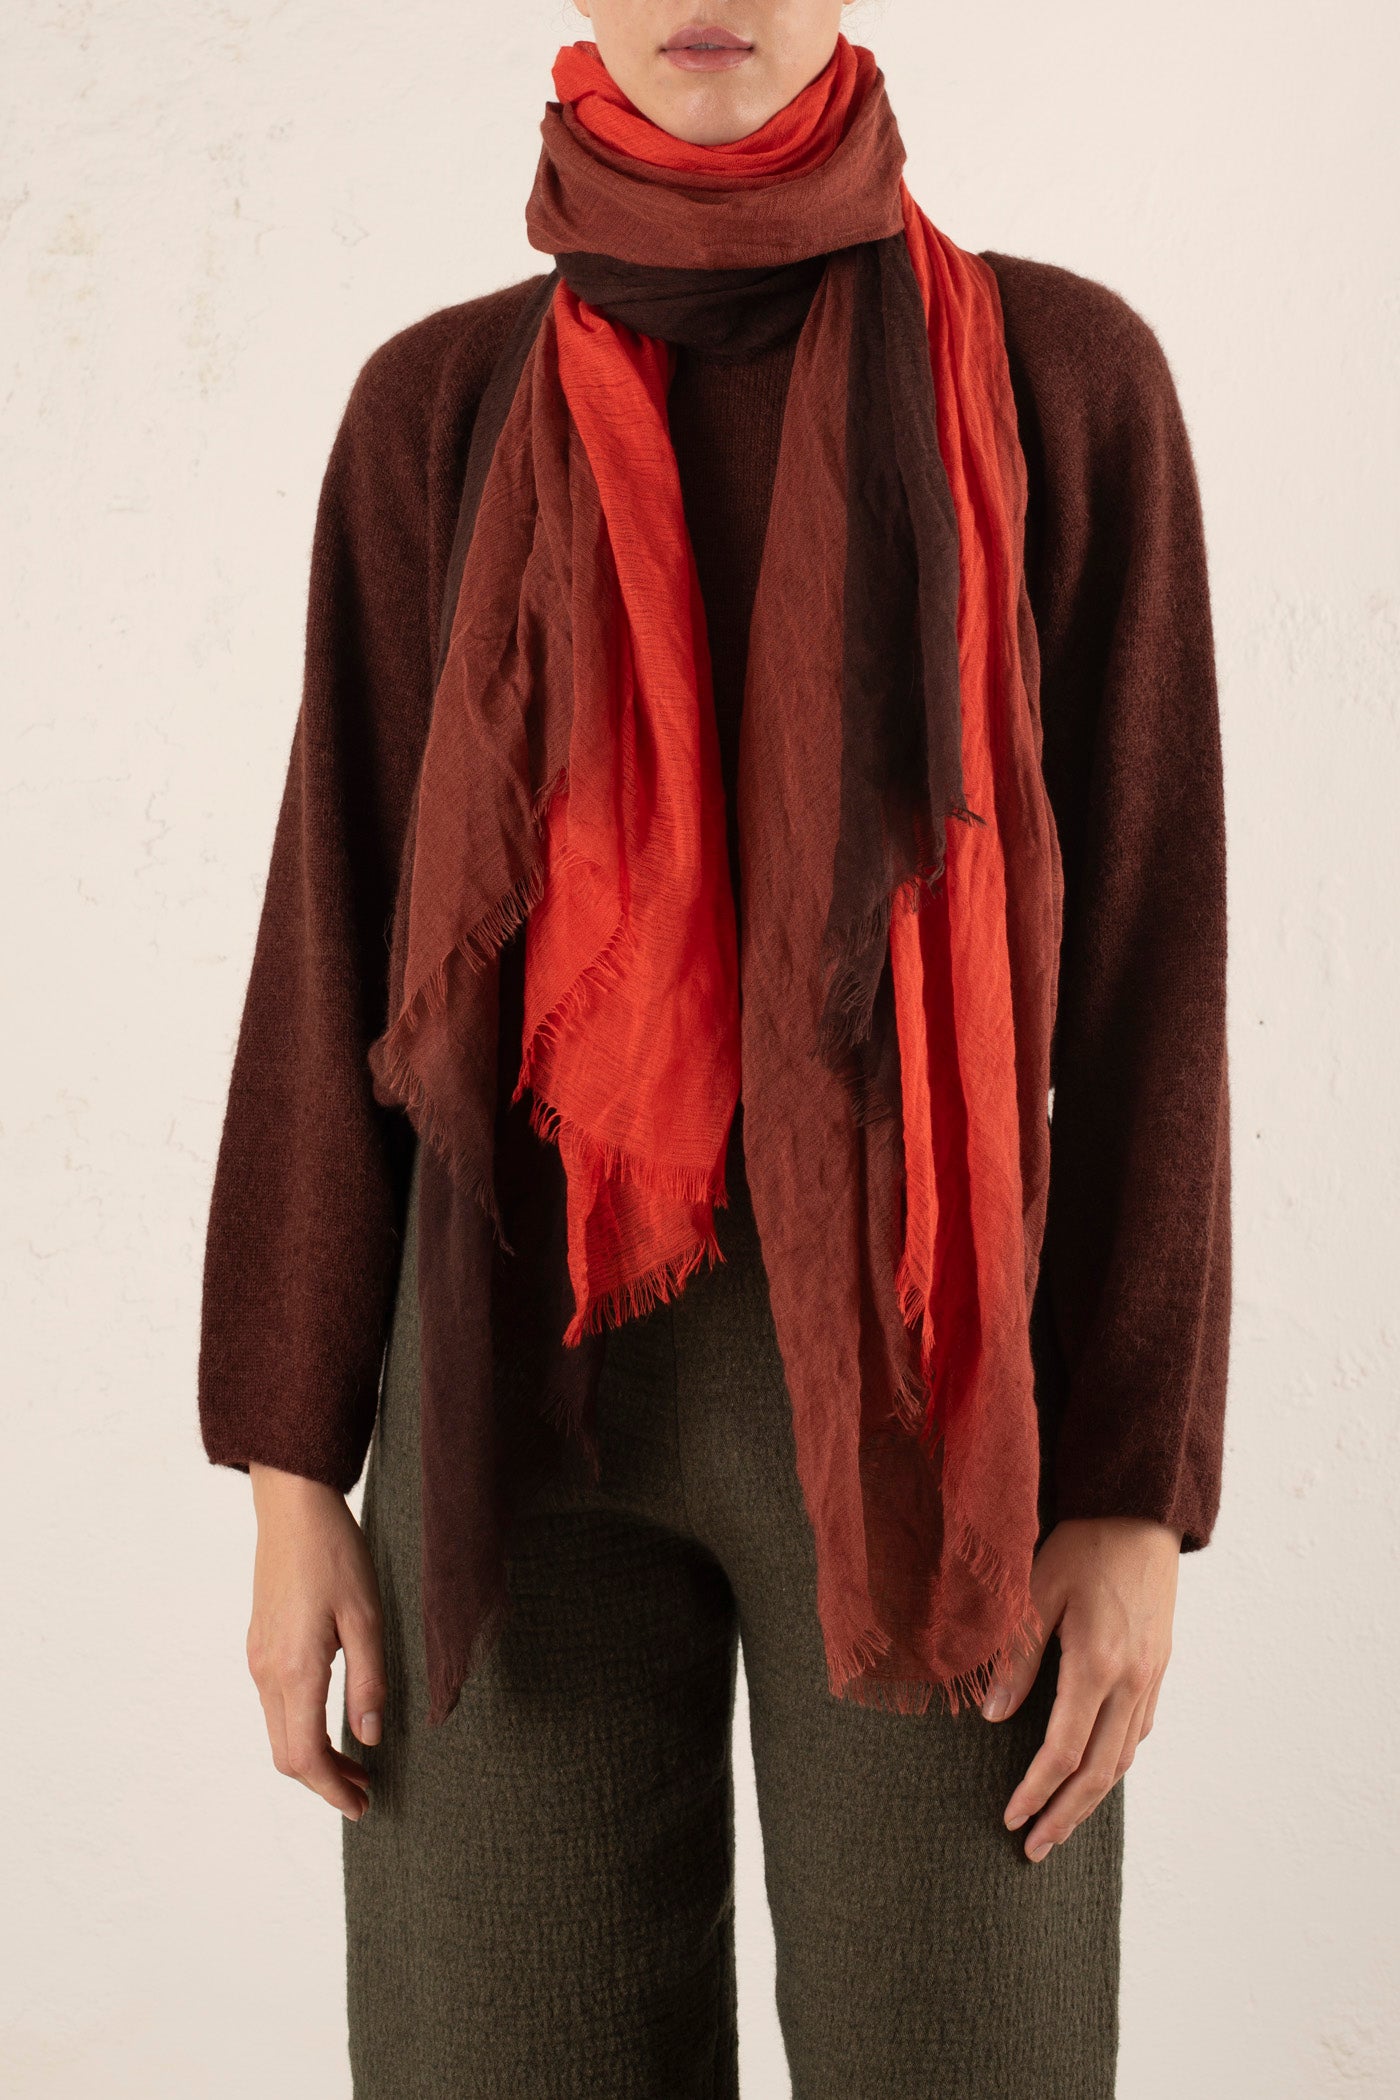 Giuseppe, maroon tricolor foulard